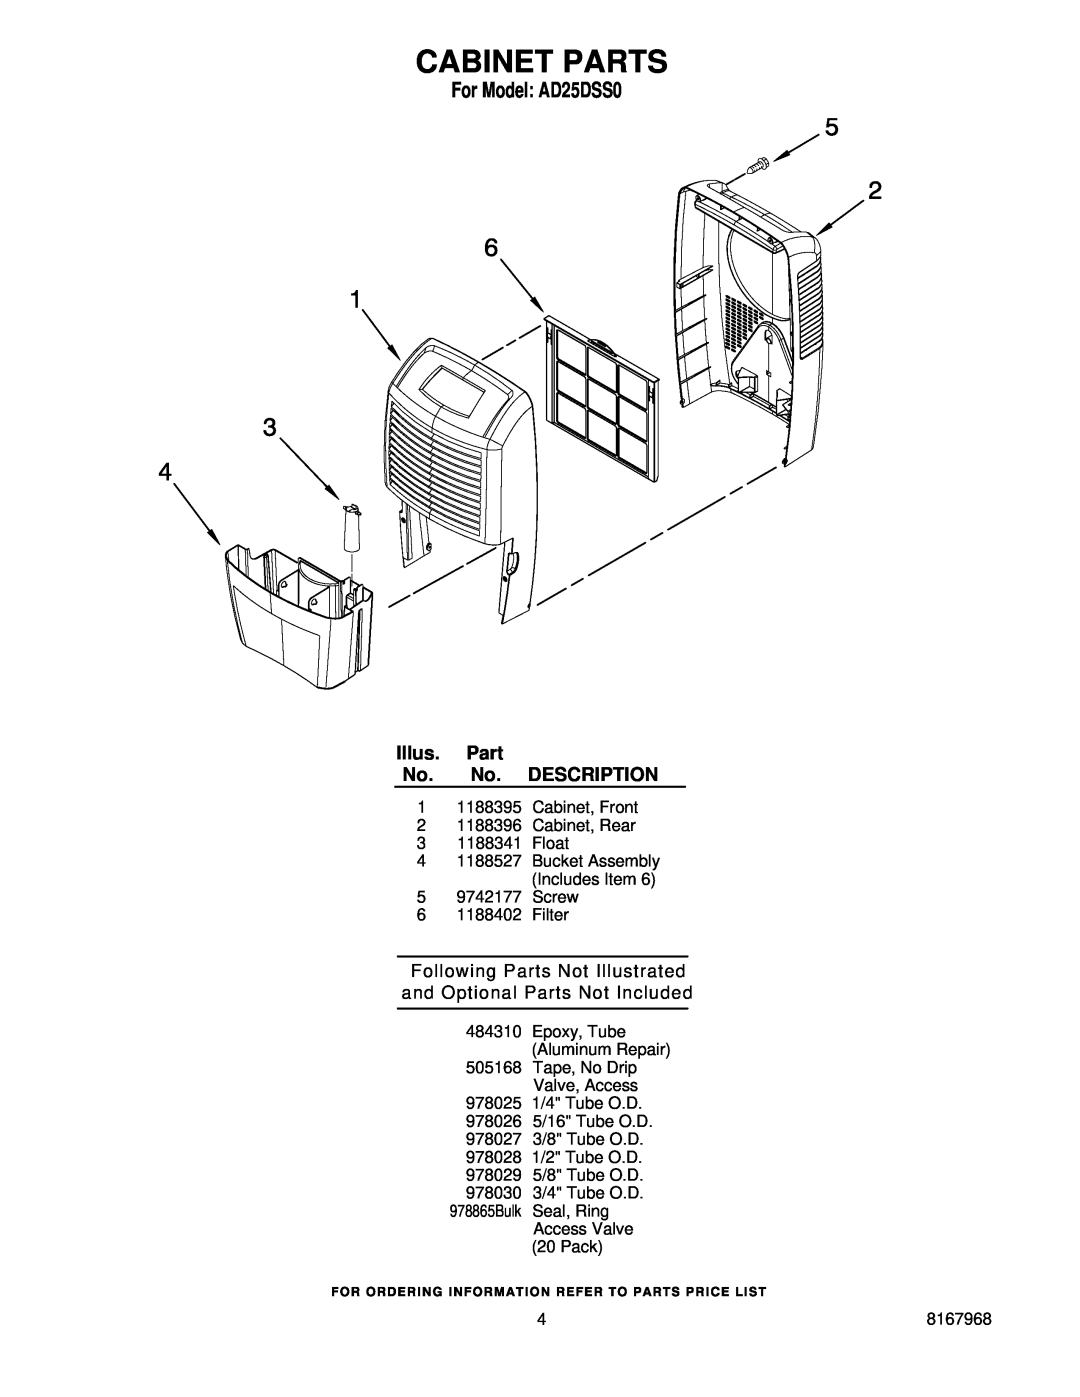 Whirlpool manual Cabinet Parts, For Model AD25DSS0, Illus. Part No. No. DESCRIPTION 